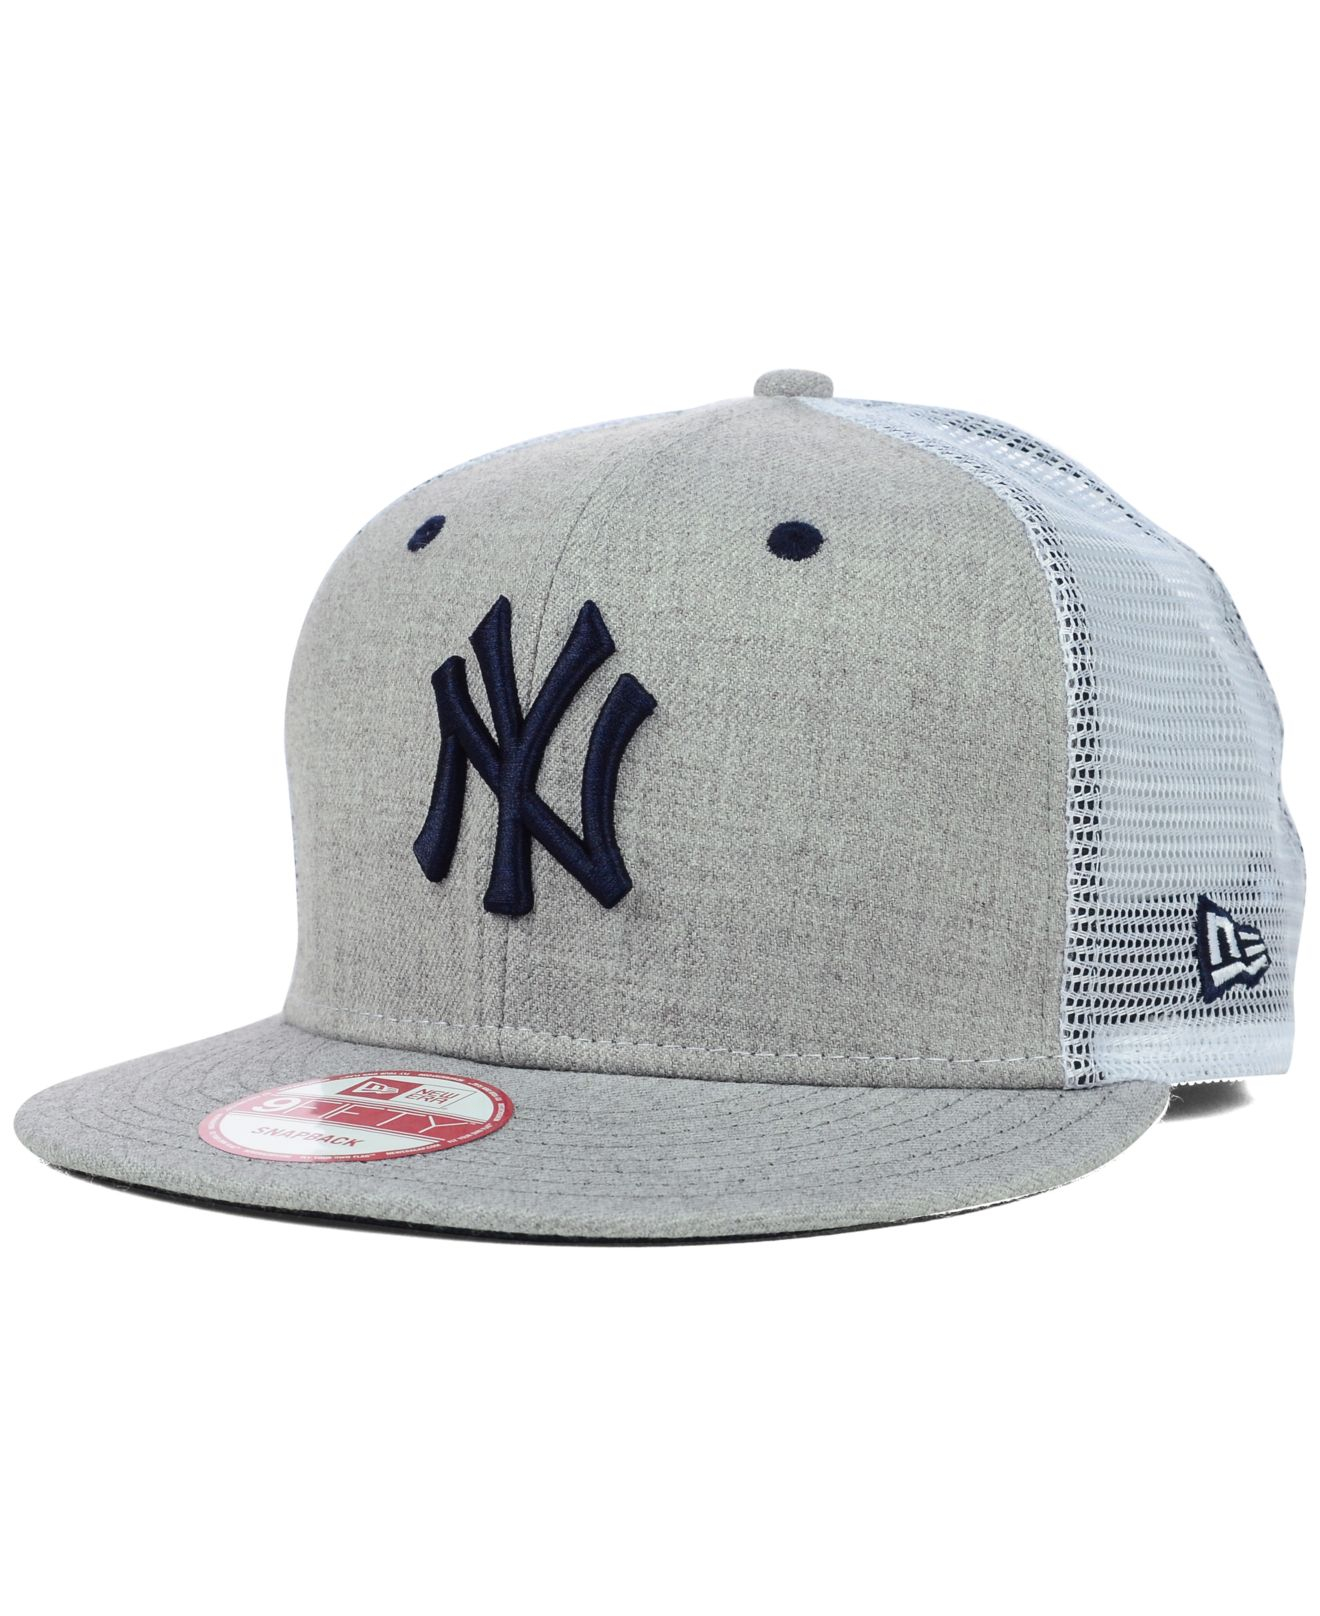 Lyst - Ktz New York Yankees Heather Trucker 9fifty Snapback Cap in Gray ...